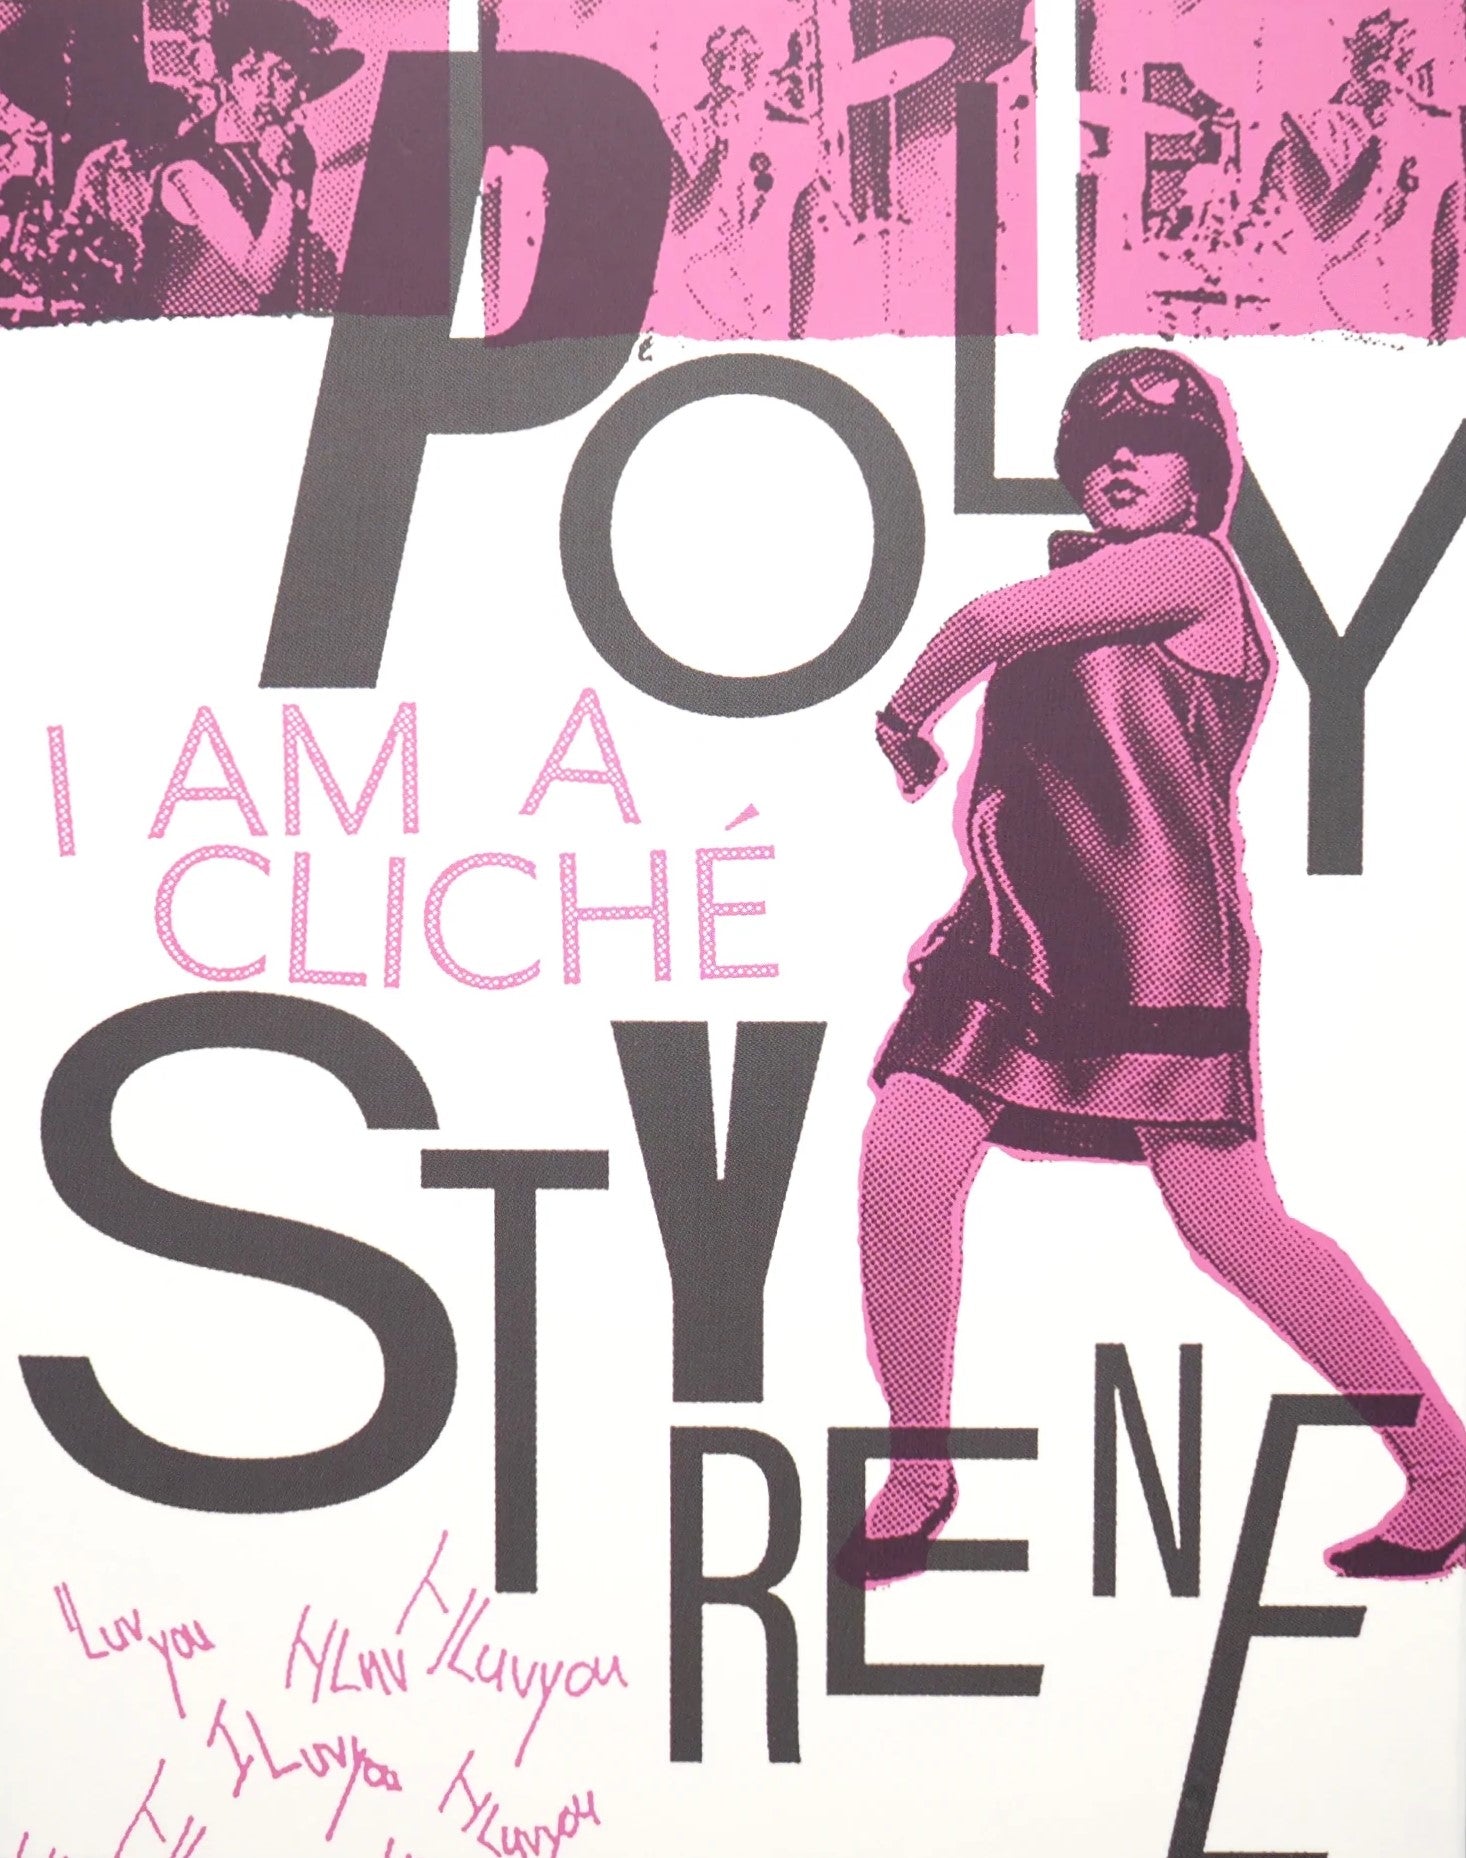 POLY STYRENE: I AM A CLICHE (LIMITED EDITION) BLU-RAY